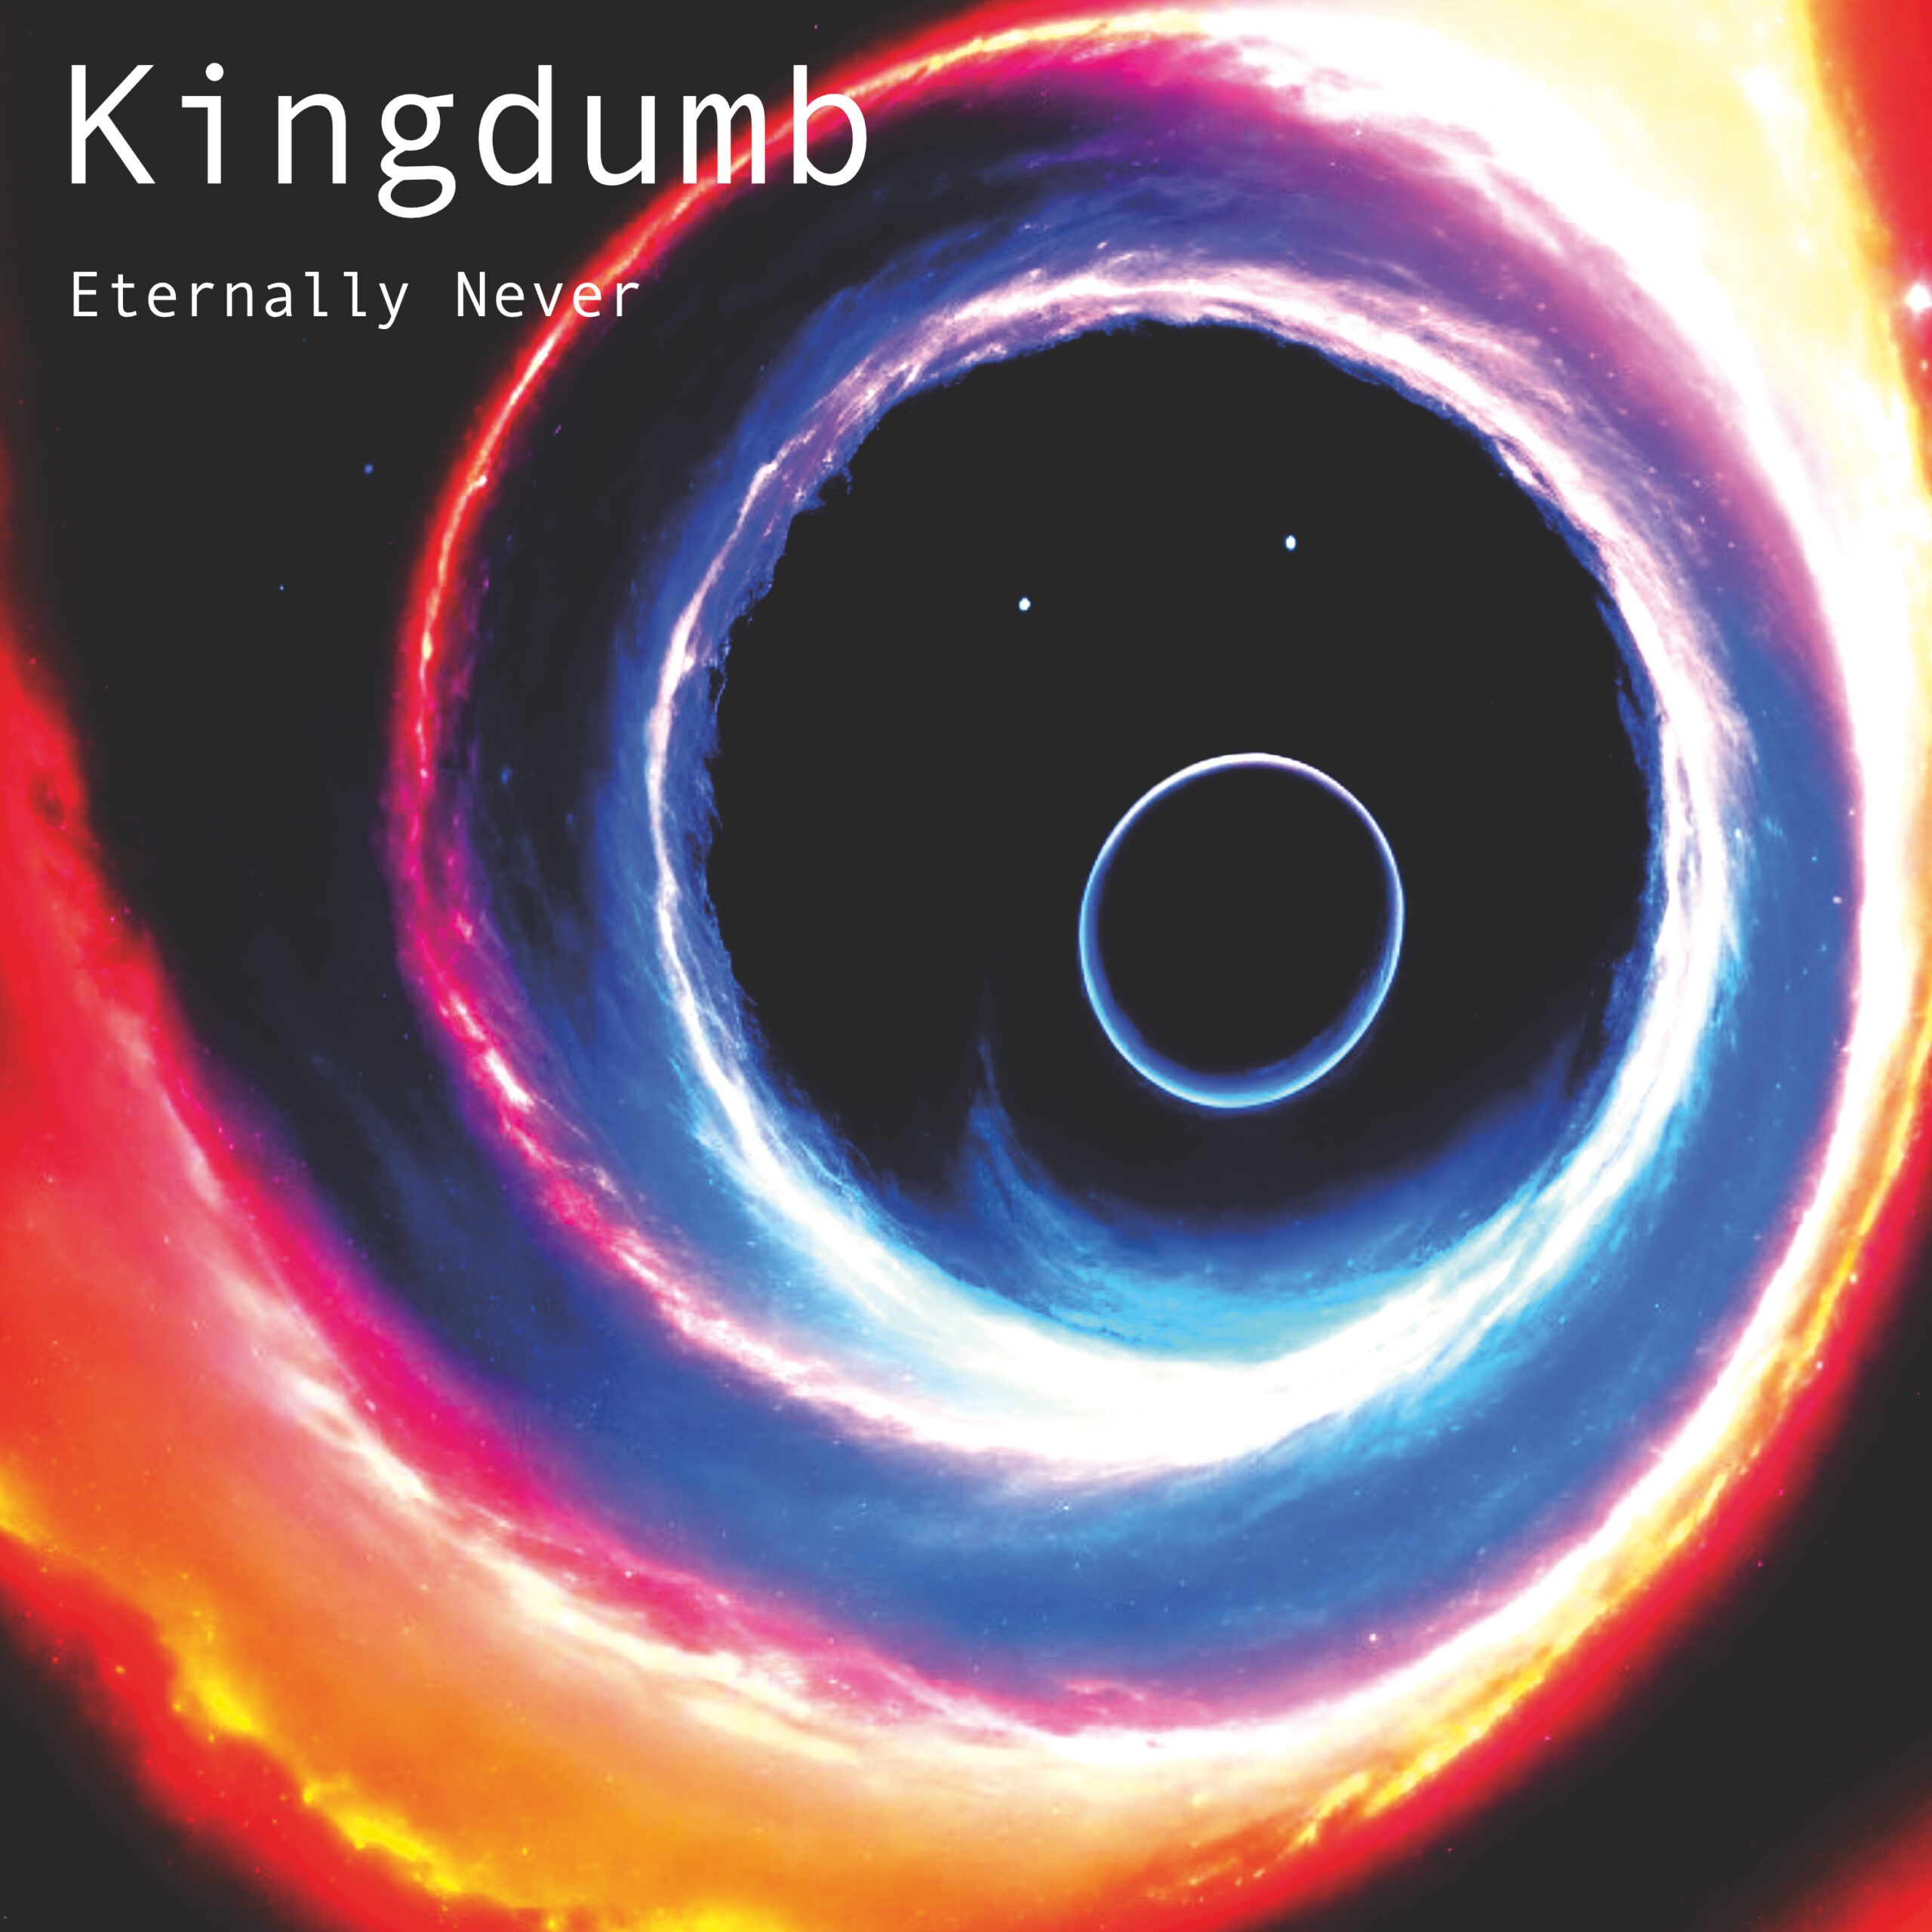 Kingdumb To Release Huge New Mixtape, “Eternally Never”